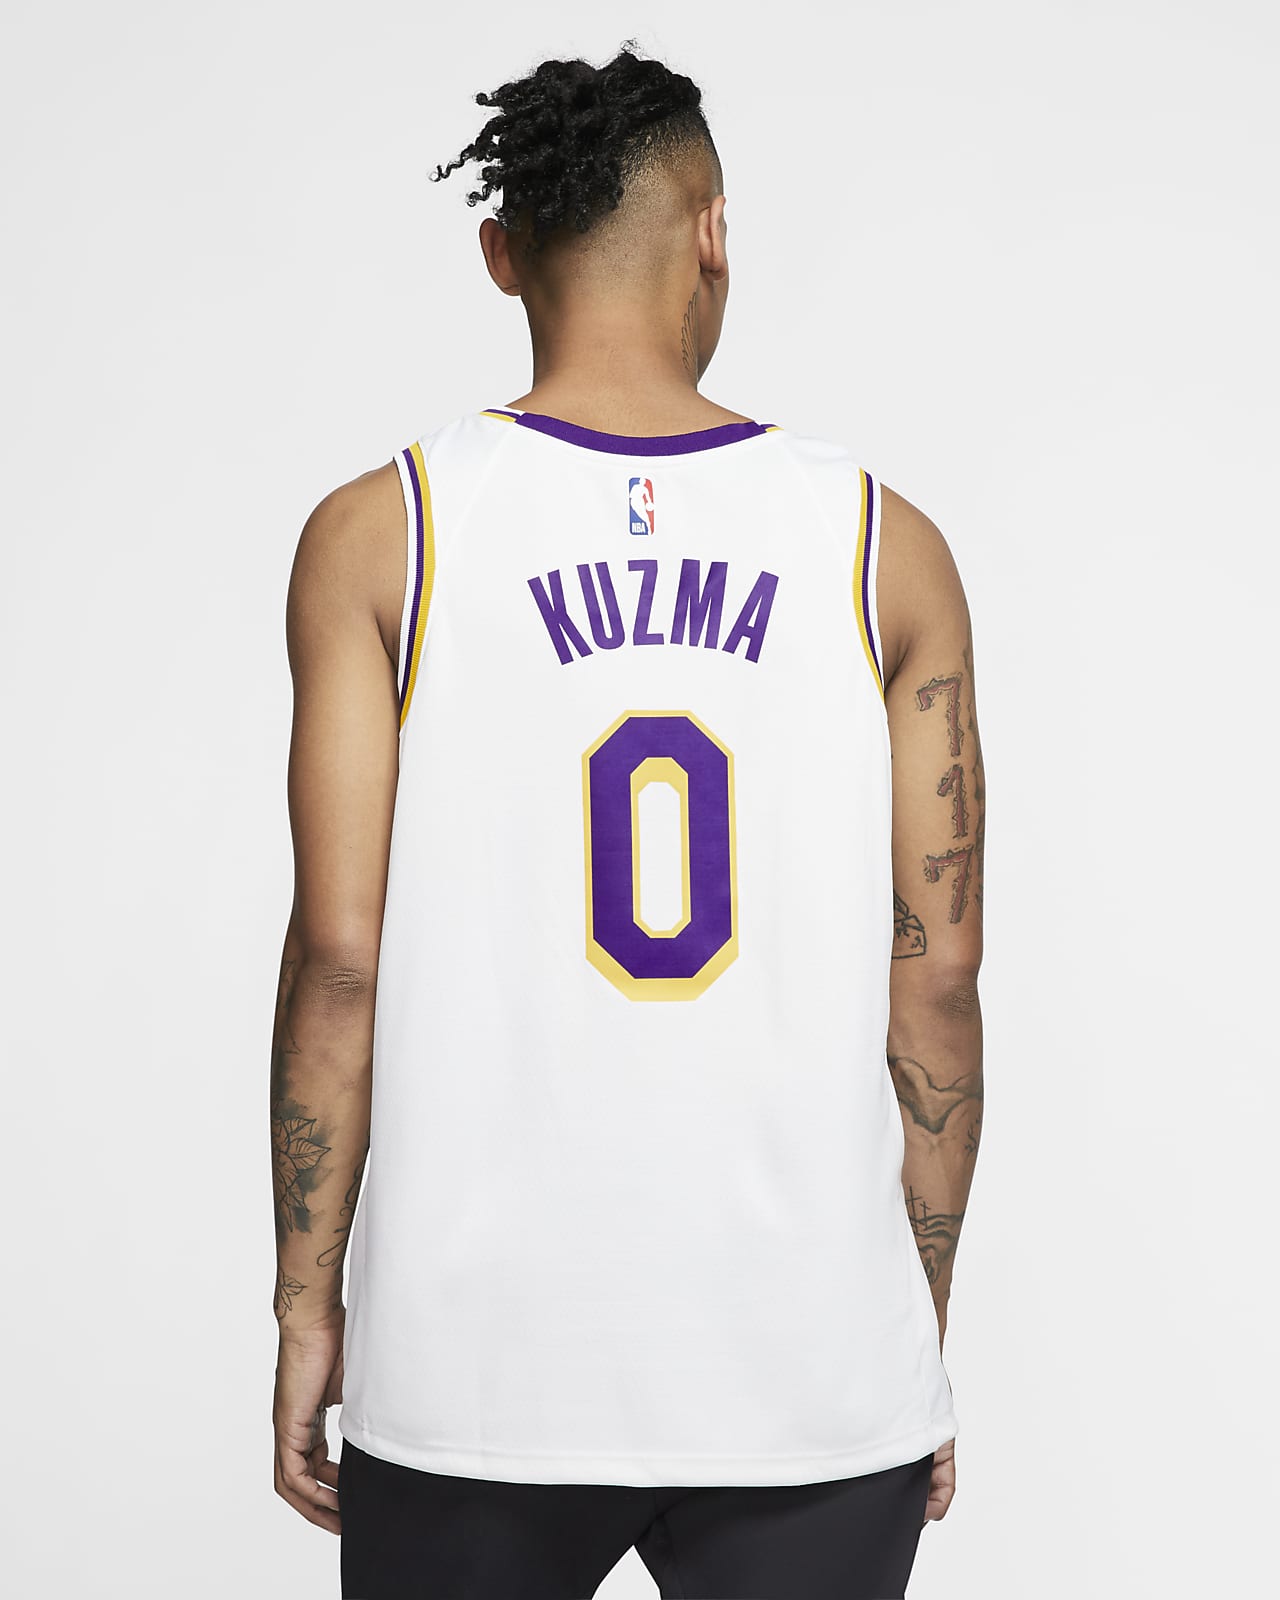 Kyle Kuzma Lakers Association Edition Nike NBA Swingman Jersey